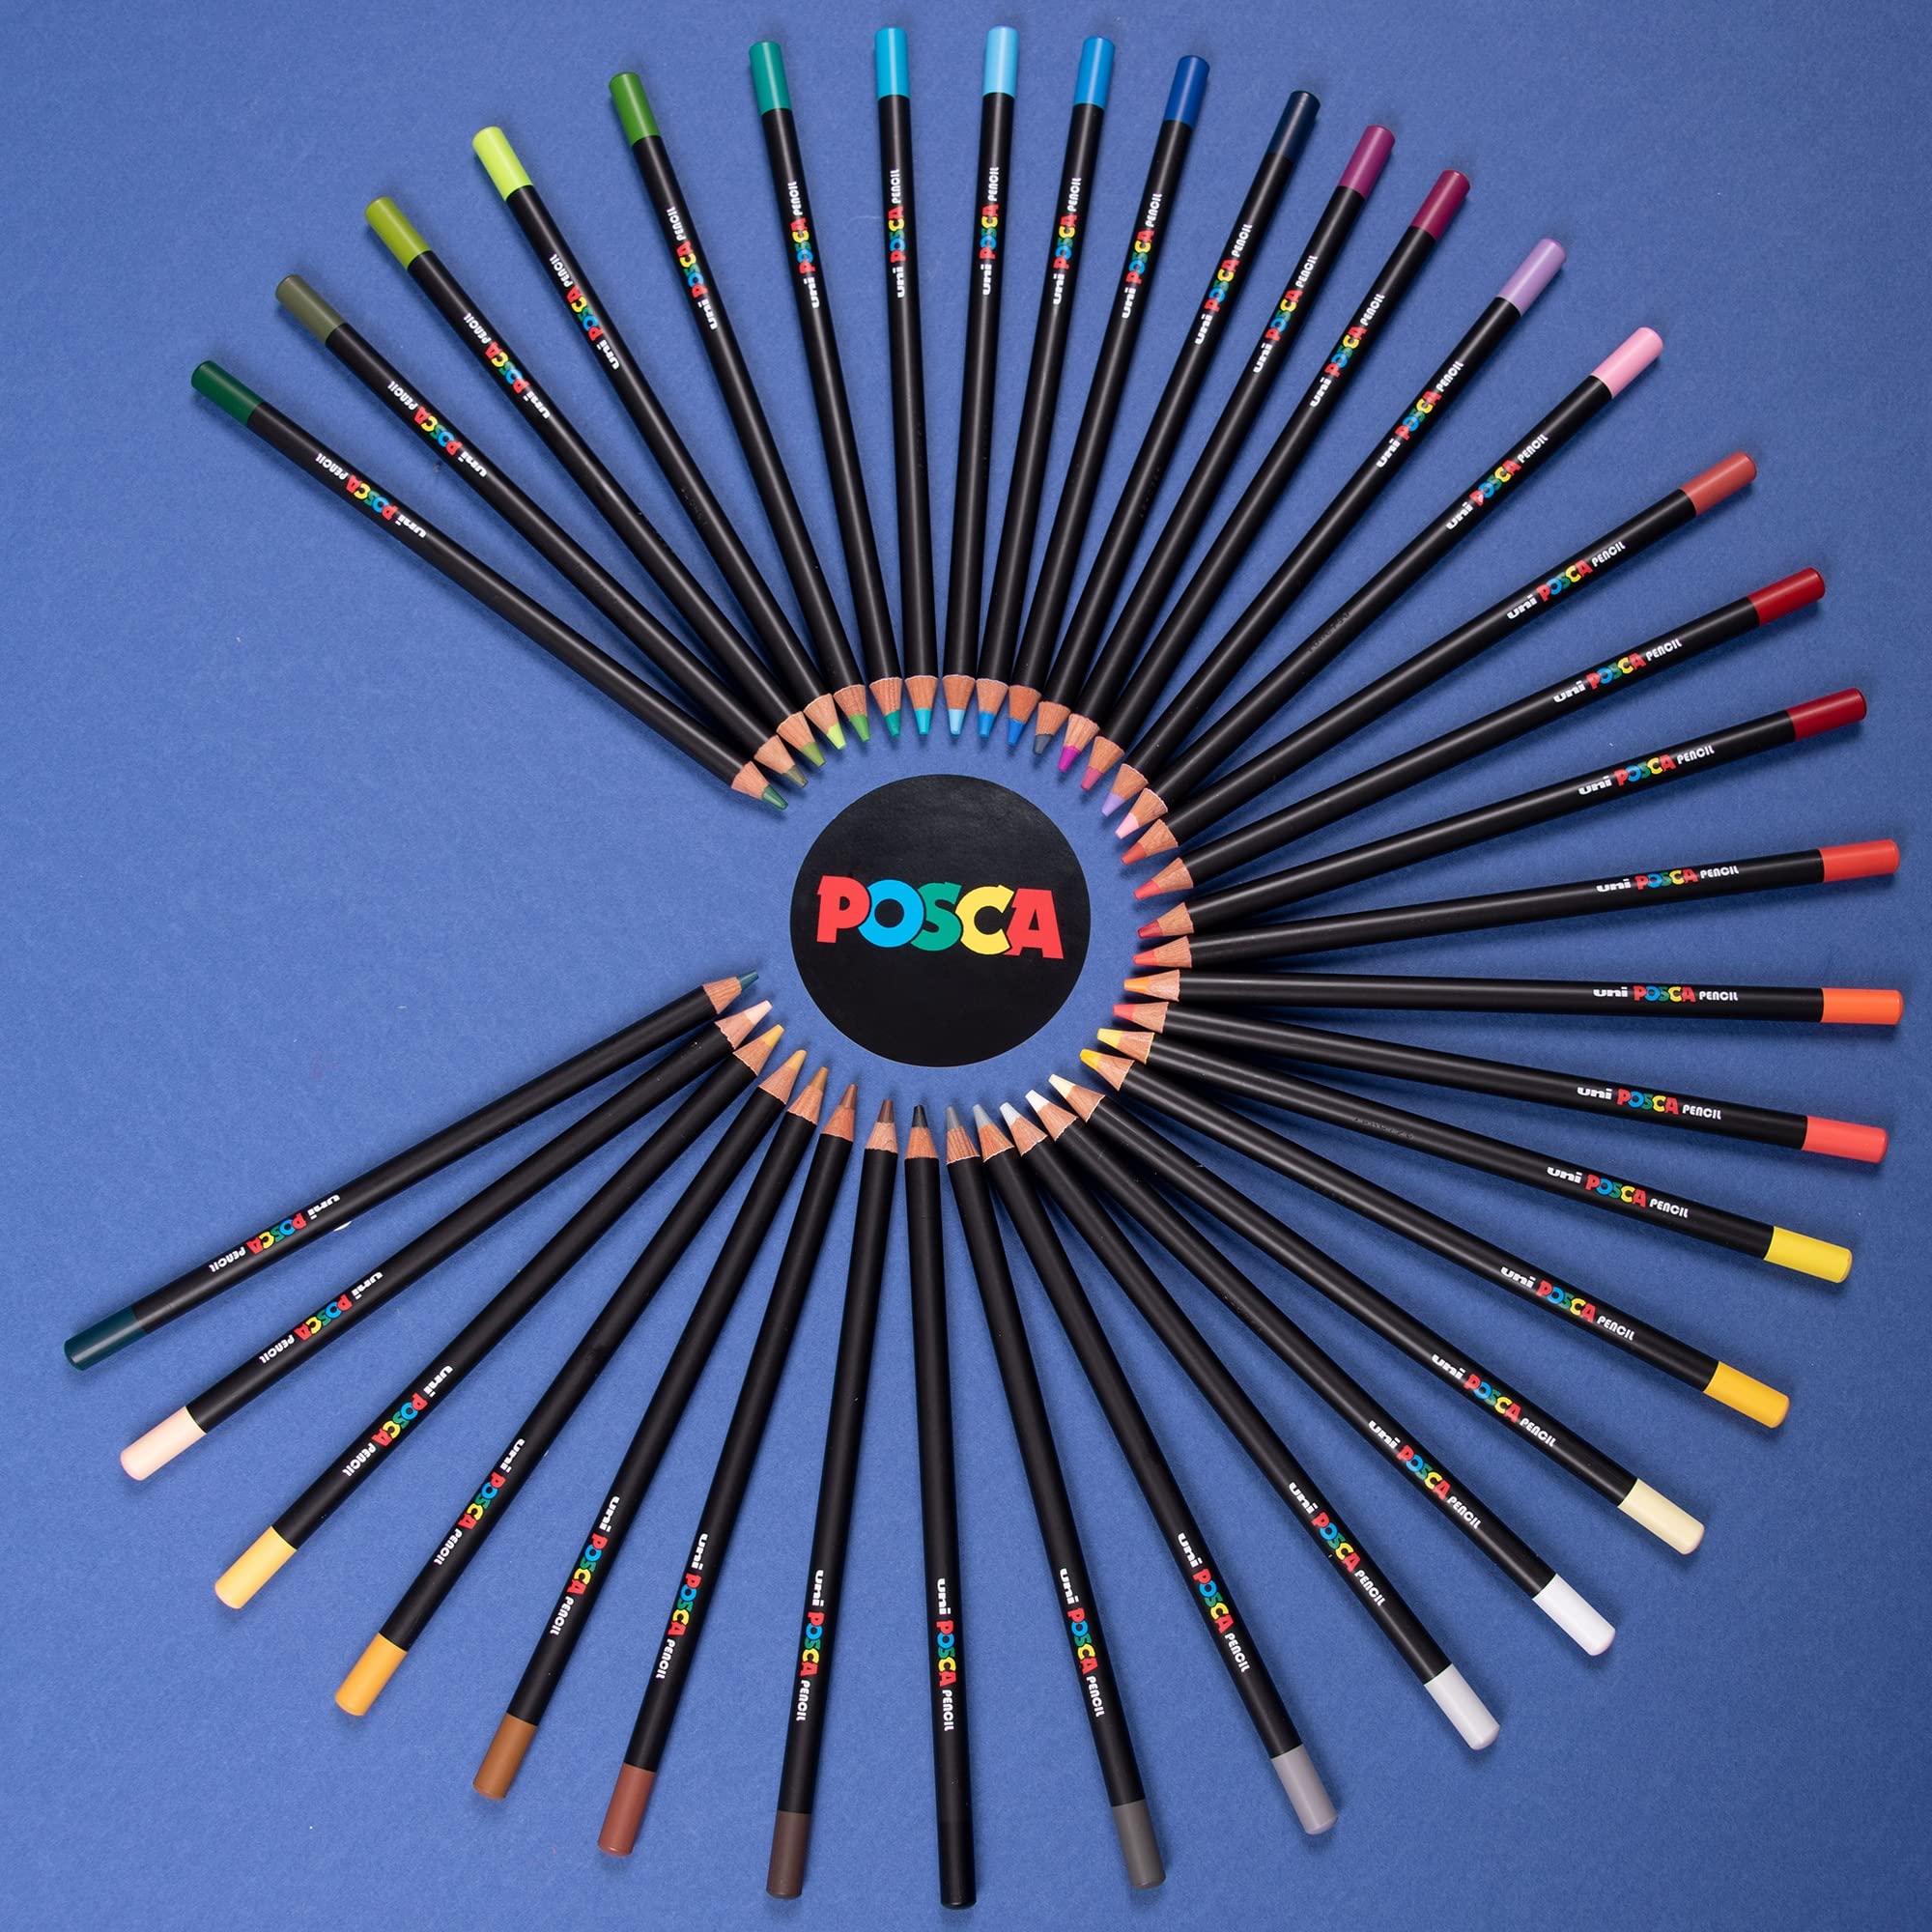 Posca Oil and Wax Coloring Pencils Art Set, 36 Prismacolor Colored Pencils, Drawing Supplies, Color Pencils, Watercolor Pencils, Colored Pencils for Adult Coloring, Book for Women or Men